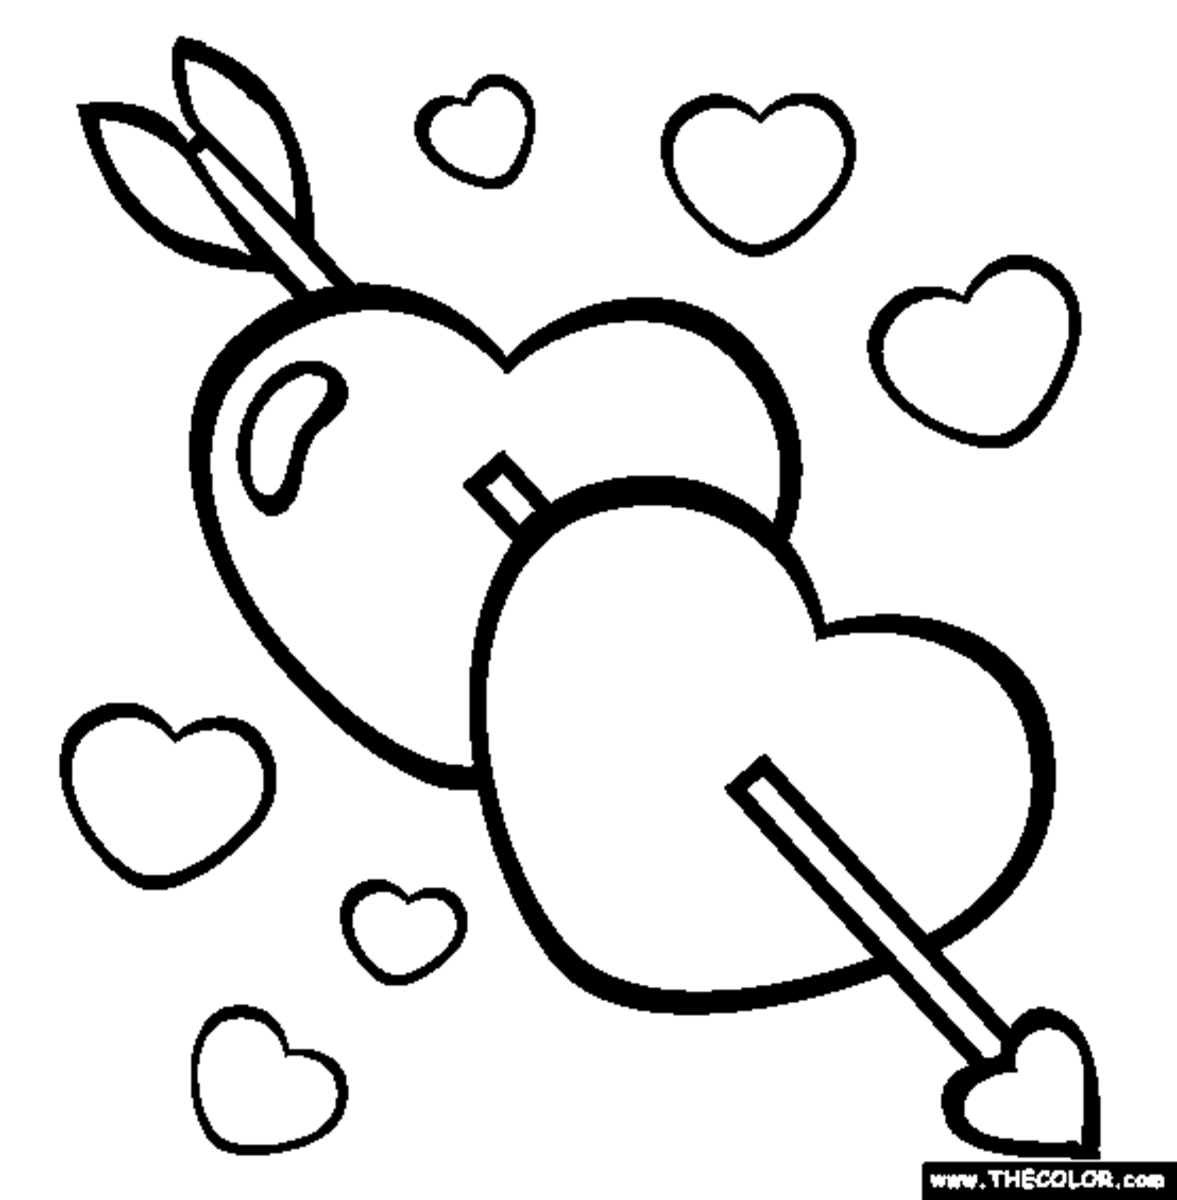 Arrow Hearts. Cupid's Arrow through two hearts image